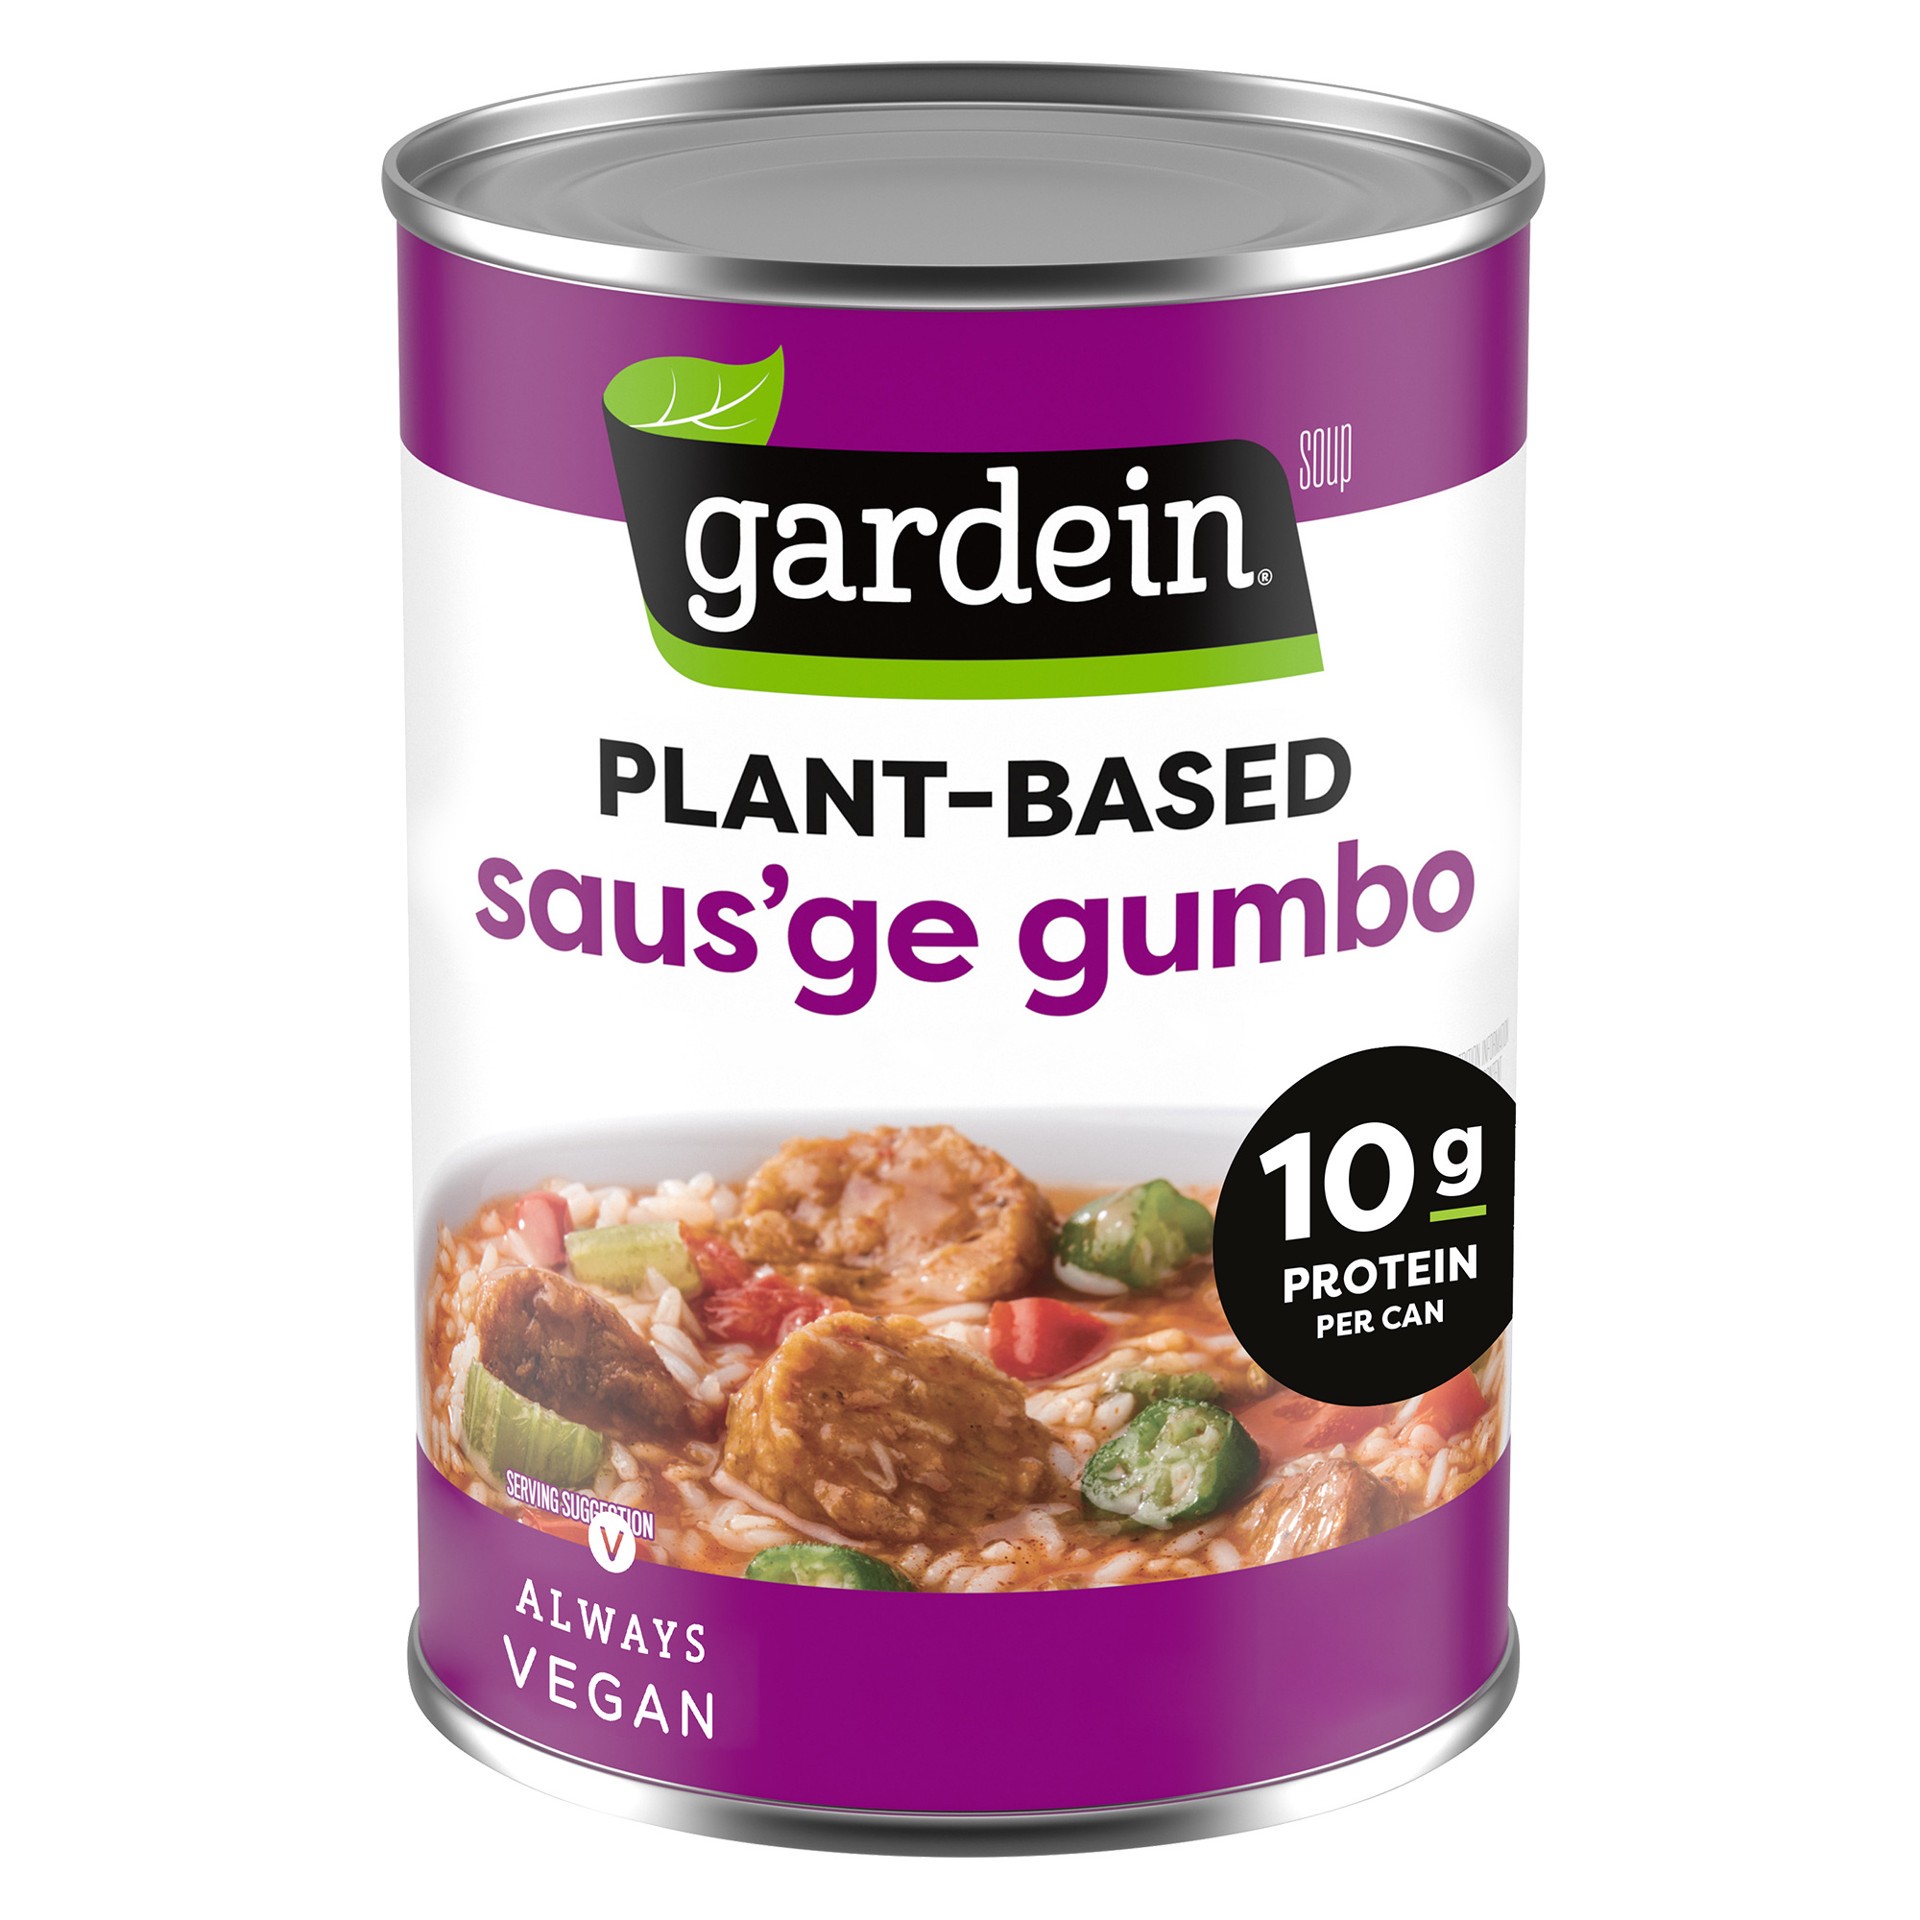 slide 1 of 1, Gardein Plant-Based Saus'ge Gumbo Soup 15 oz, 15 oz